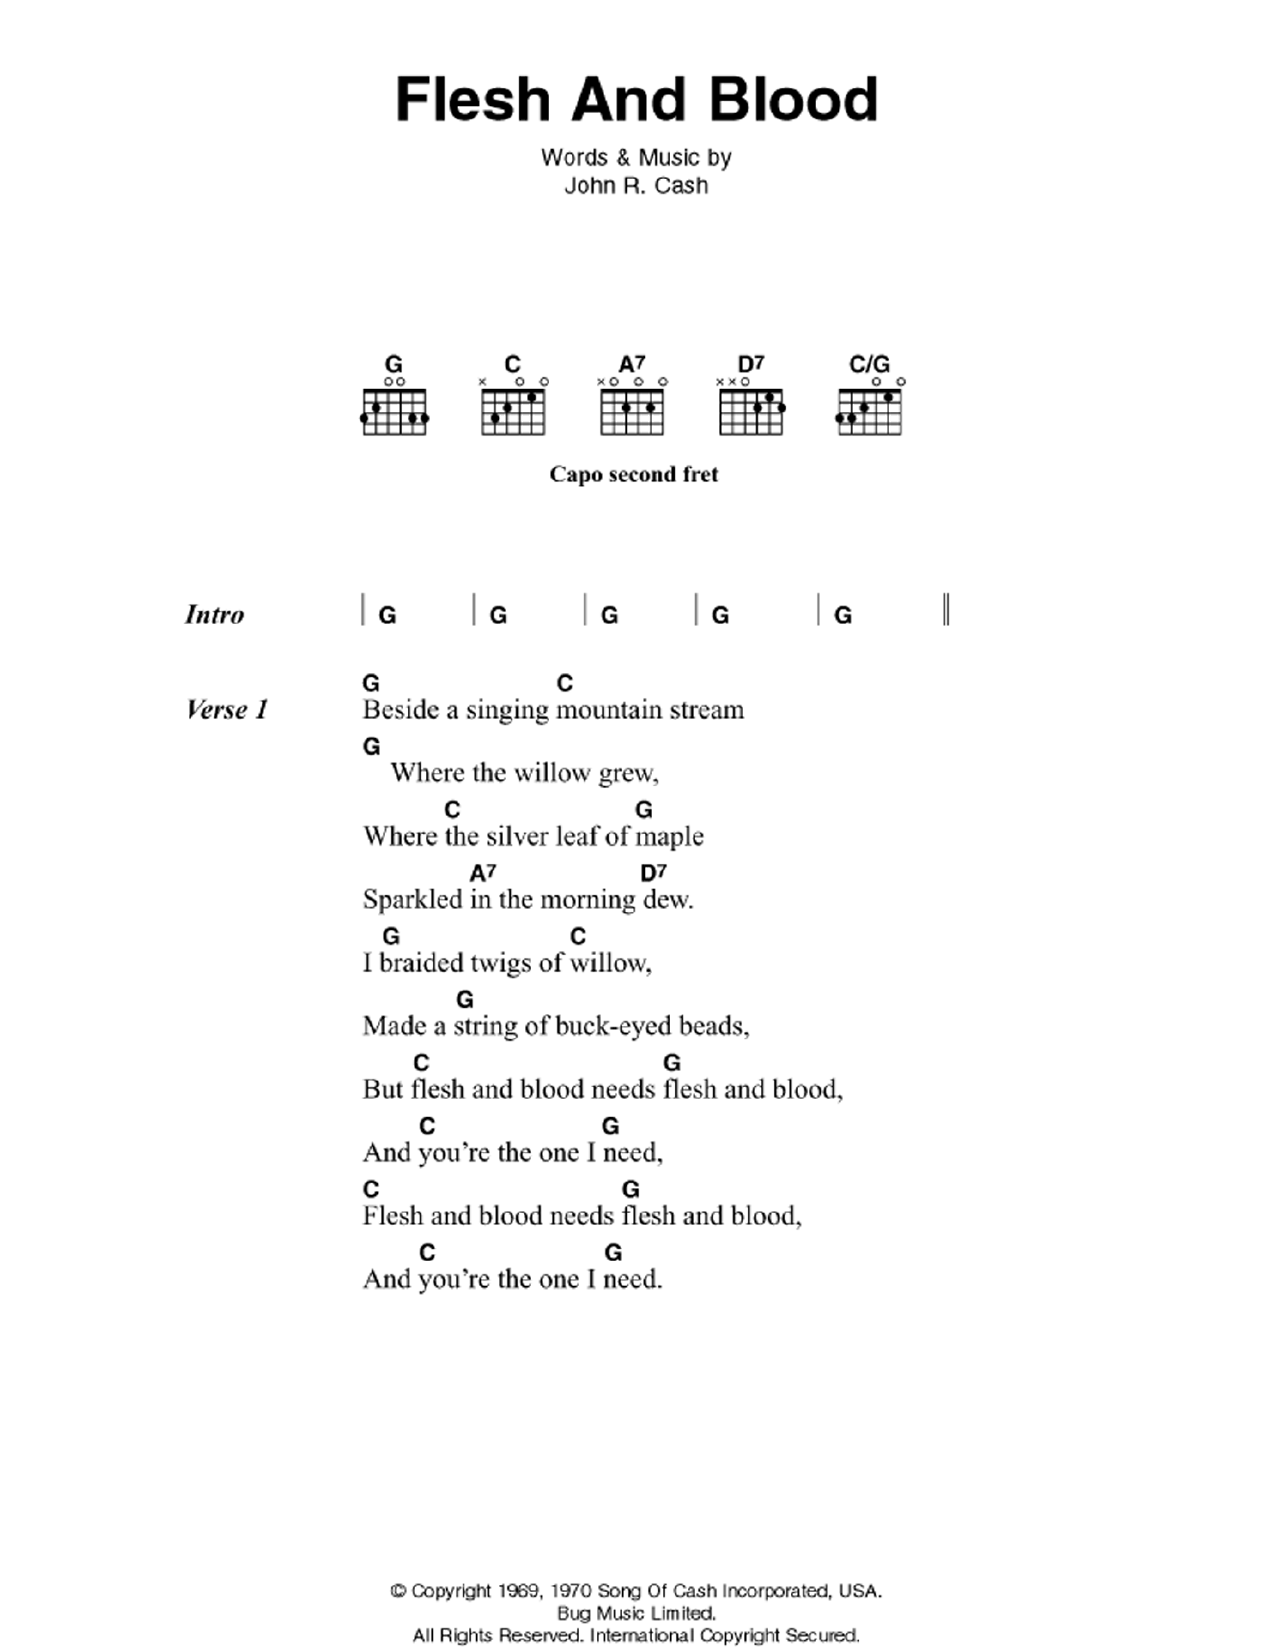 Johnny Cash Flesh And Blood Sheet Music Notes & Chords for Lyrics & Chords - Download or Print PDF